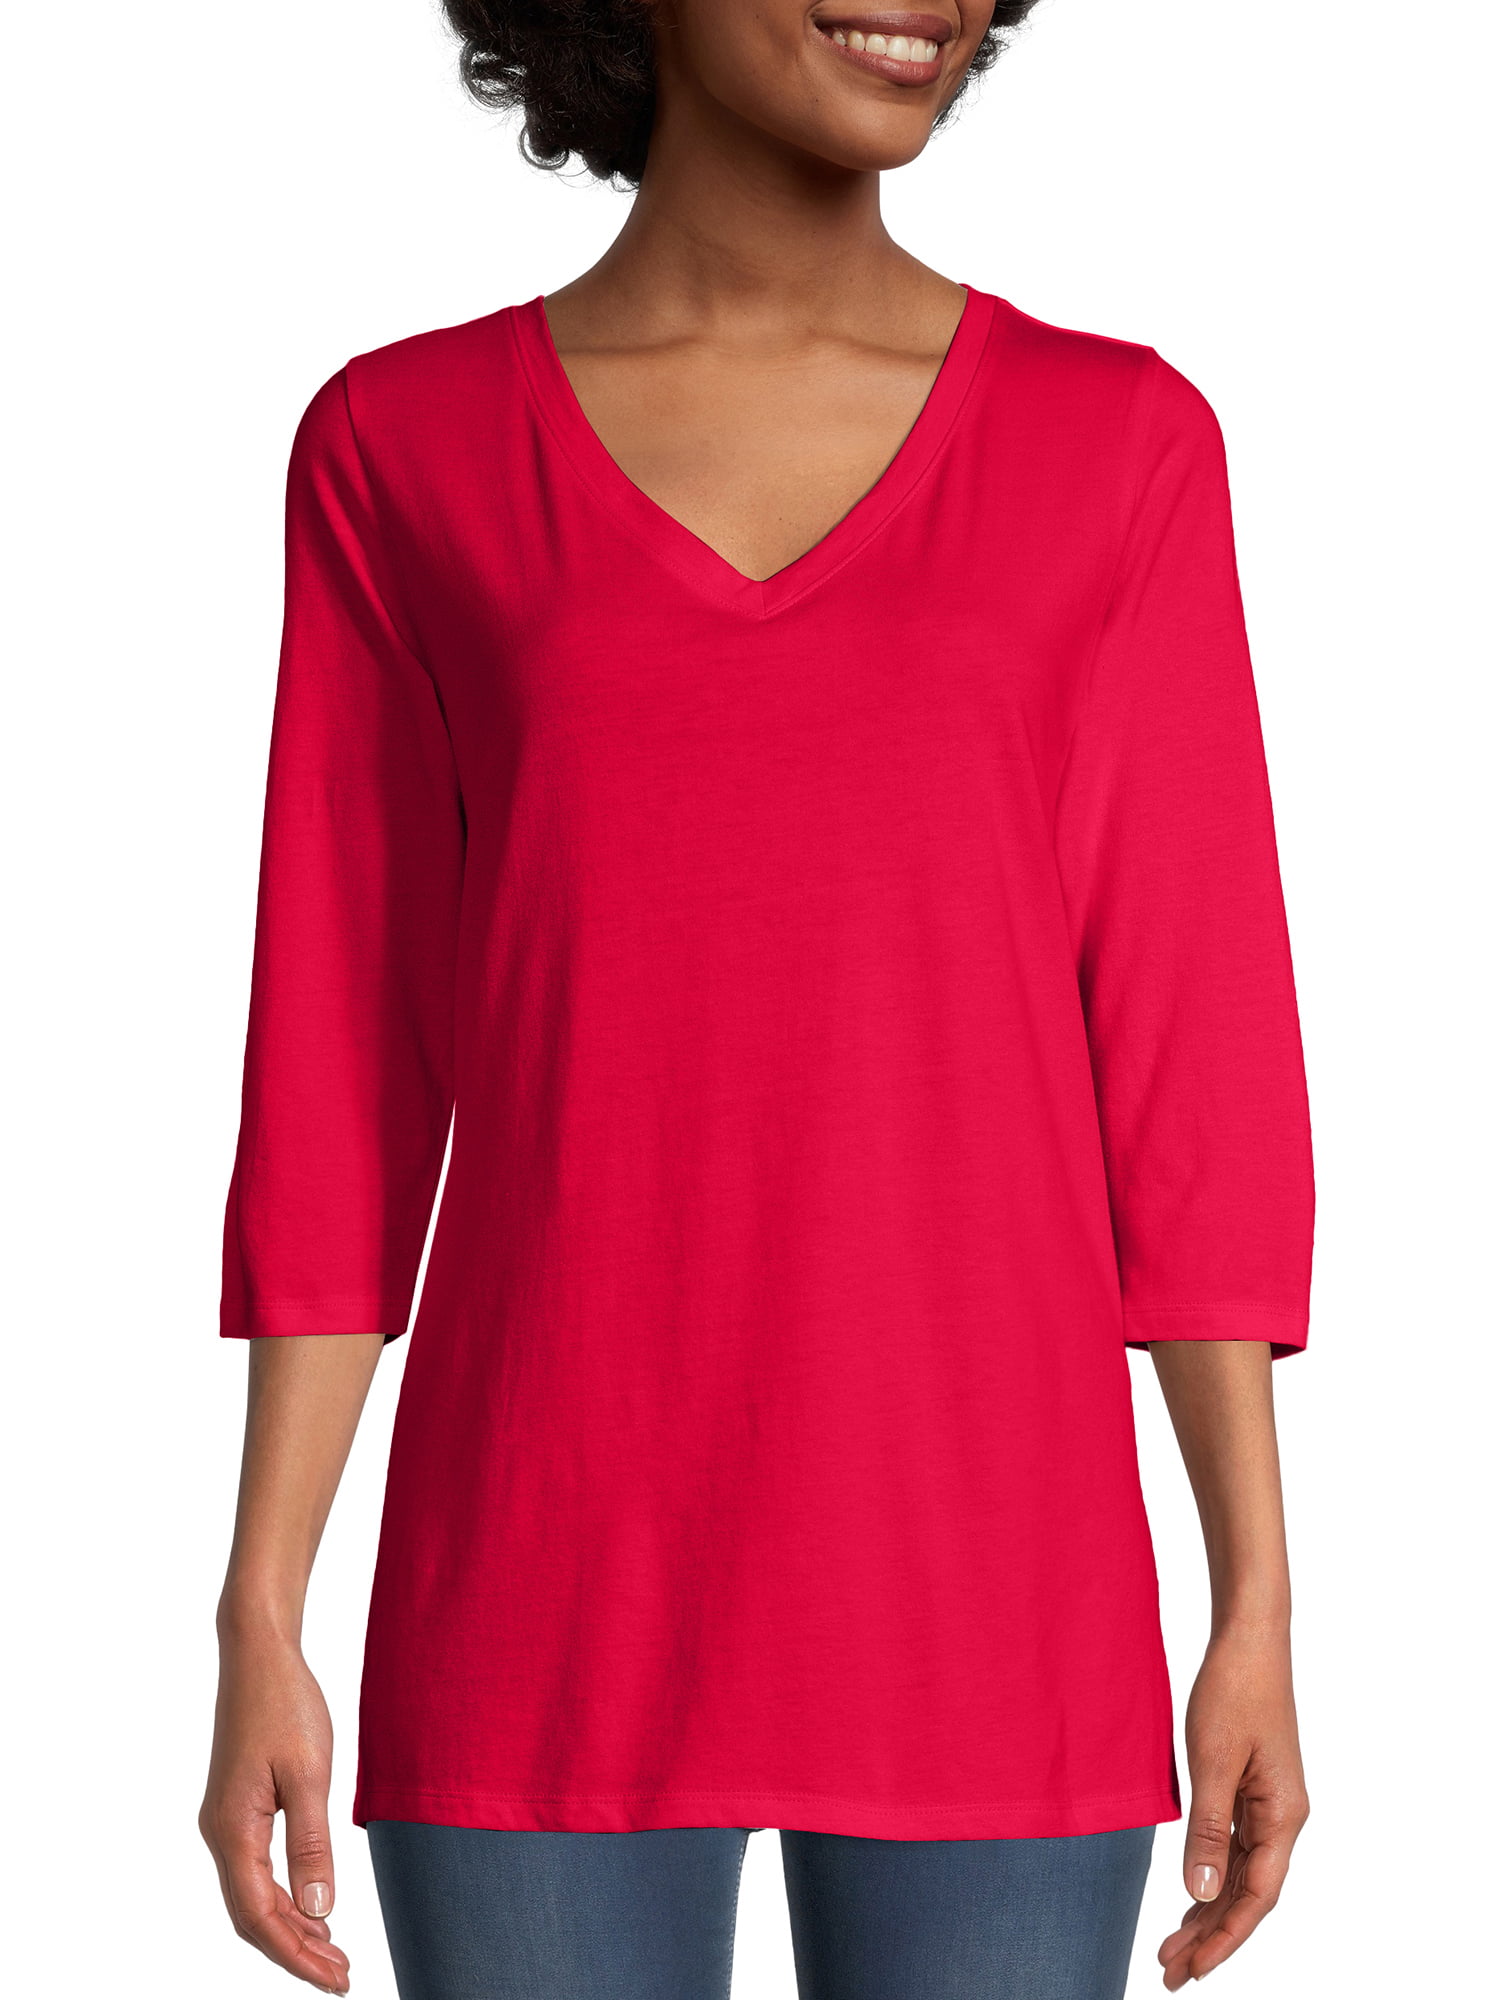 Hanes Women's 3/4 Sleeve Flowy V-Neck T-Shirt - Walmart.com